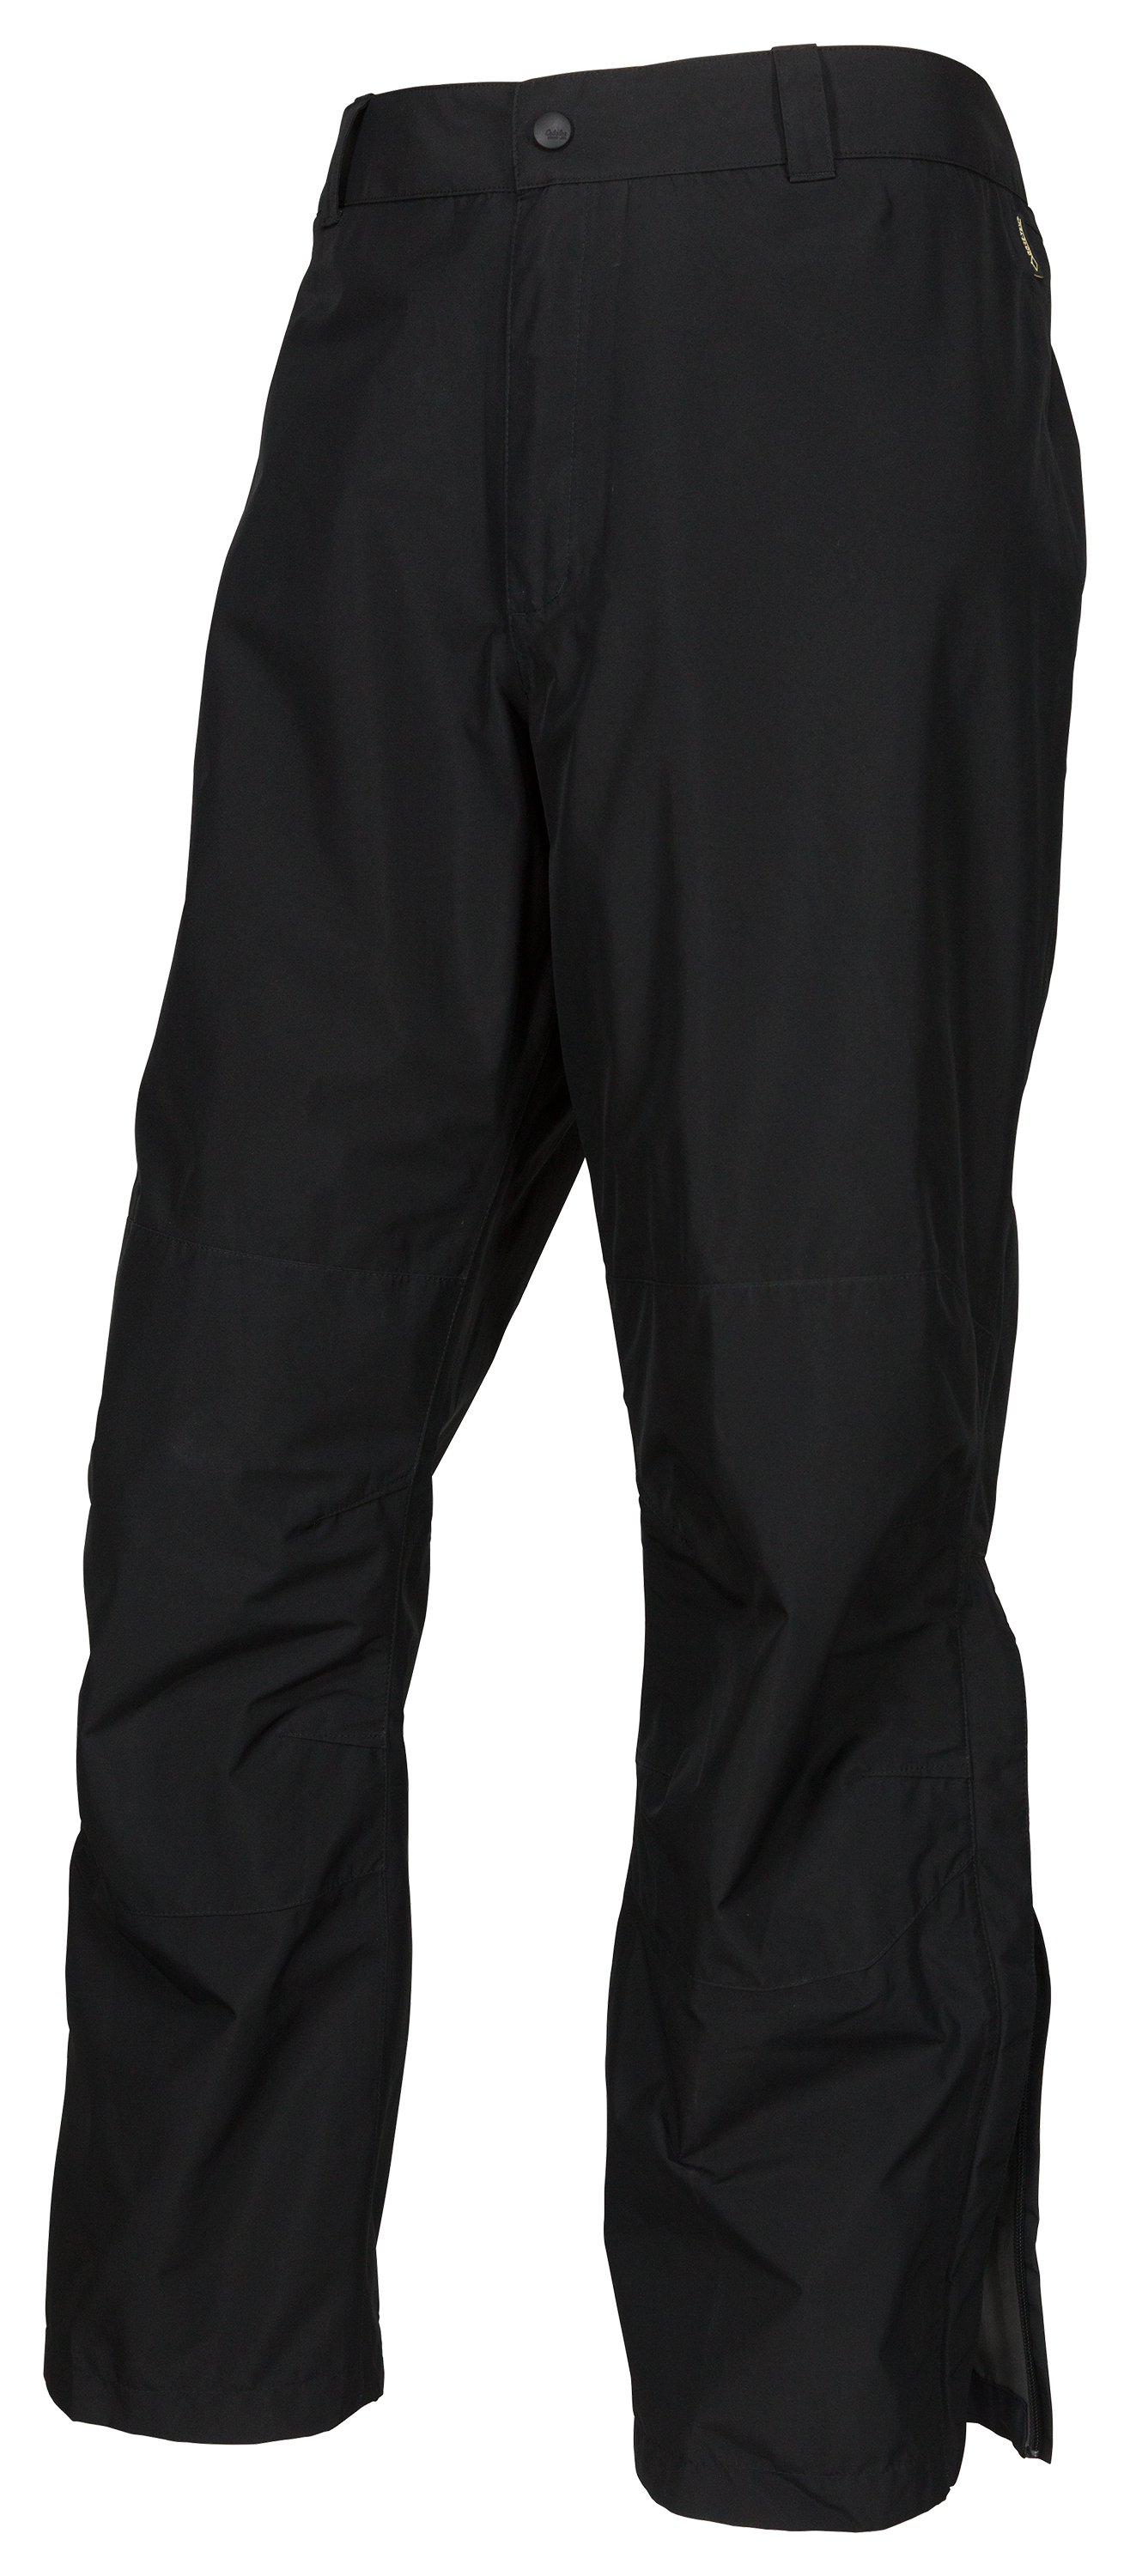 Guide Gear Waterproof Pants Mens, Hiking, Fishing, Camping Pursuit Performance Pants, Men's, Size: W38 L32, Beige